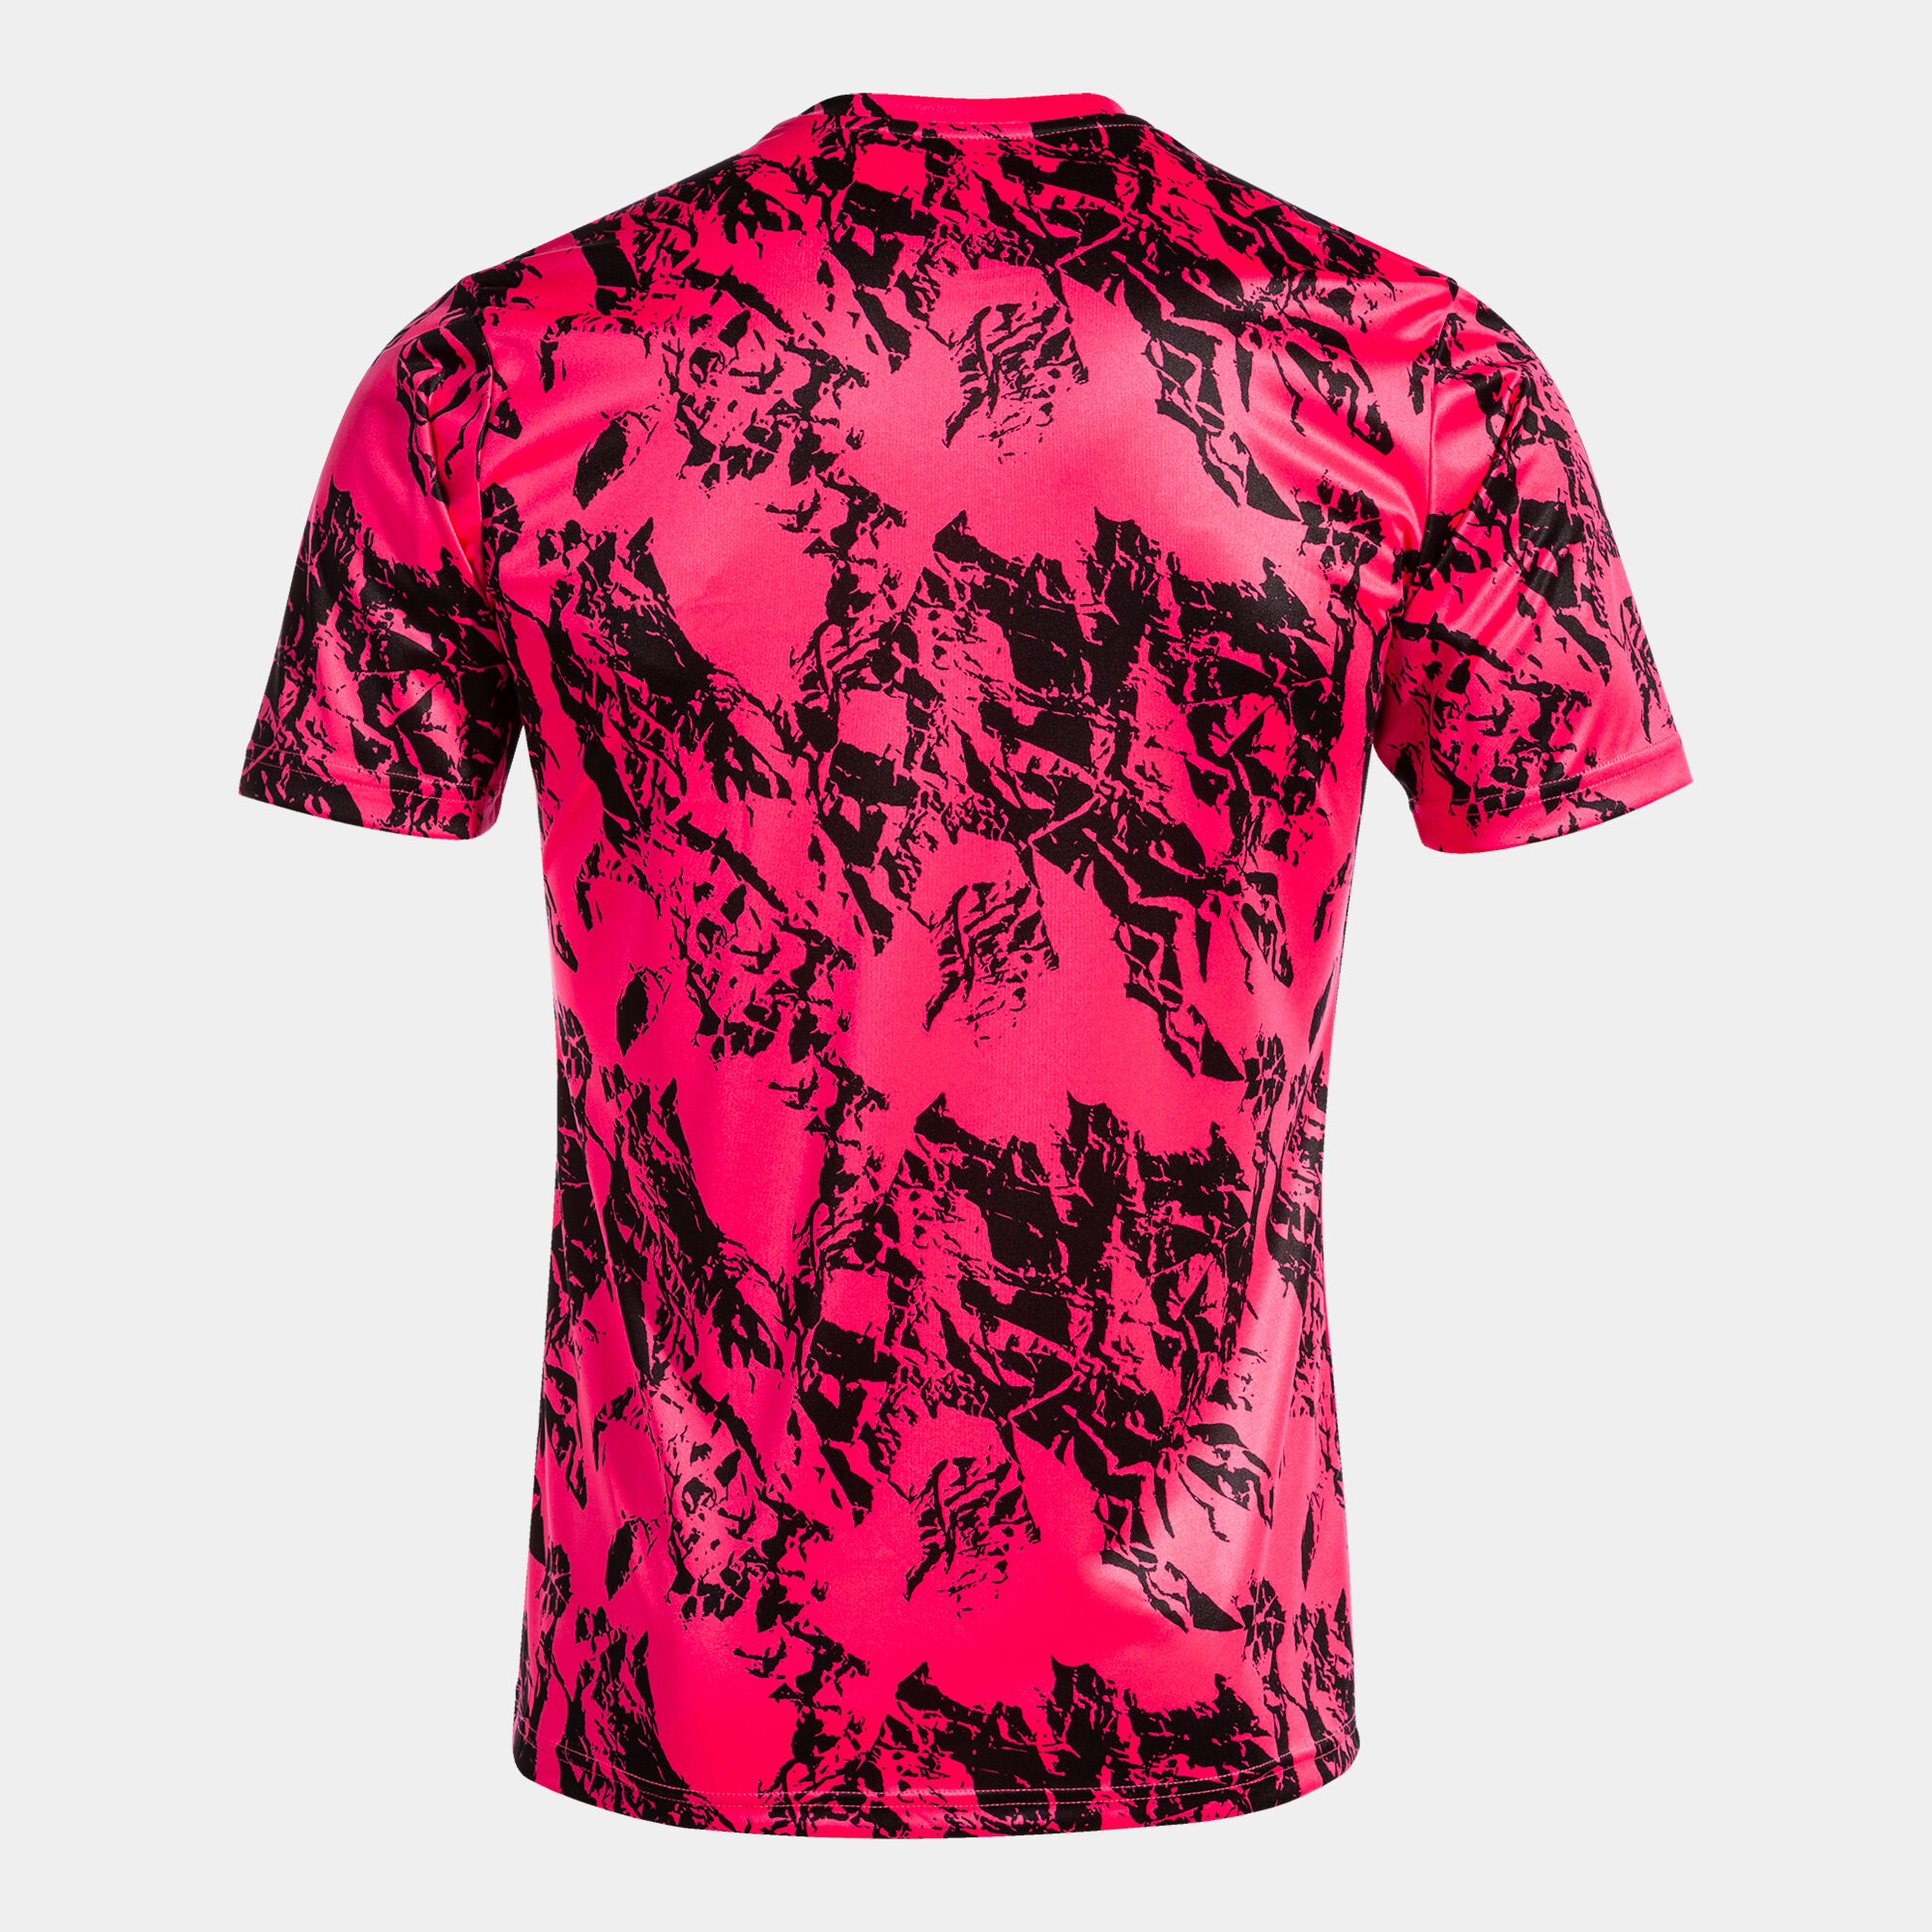 Camiseta manga corta hombre Lion rosa flúor negro